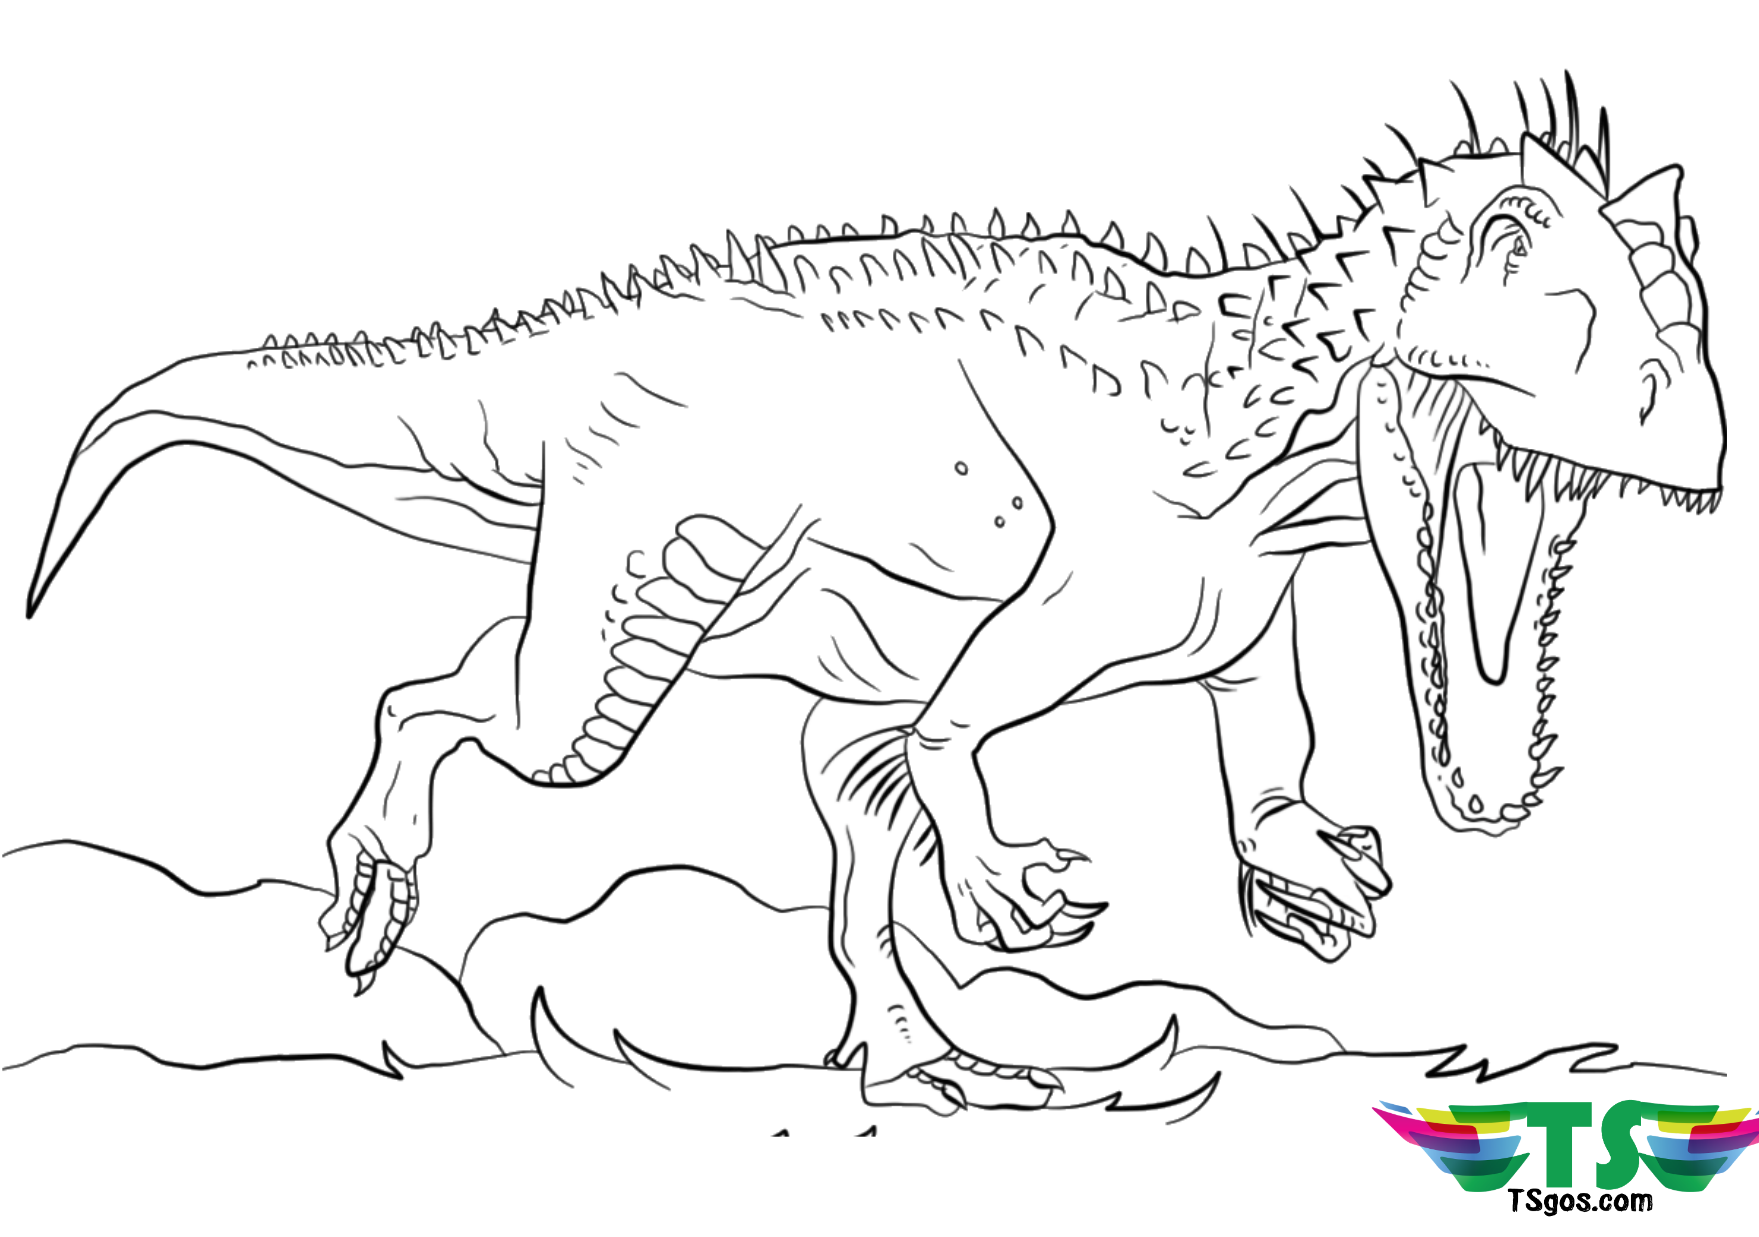 Dinosaur Tyrannosaurus rex coloring page   TSgos.com   TSgos.com